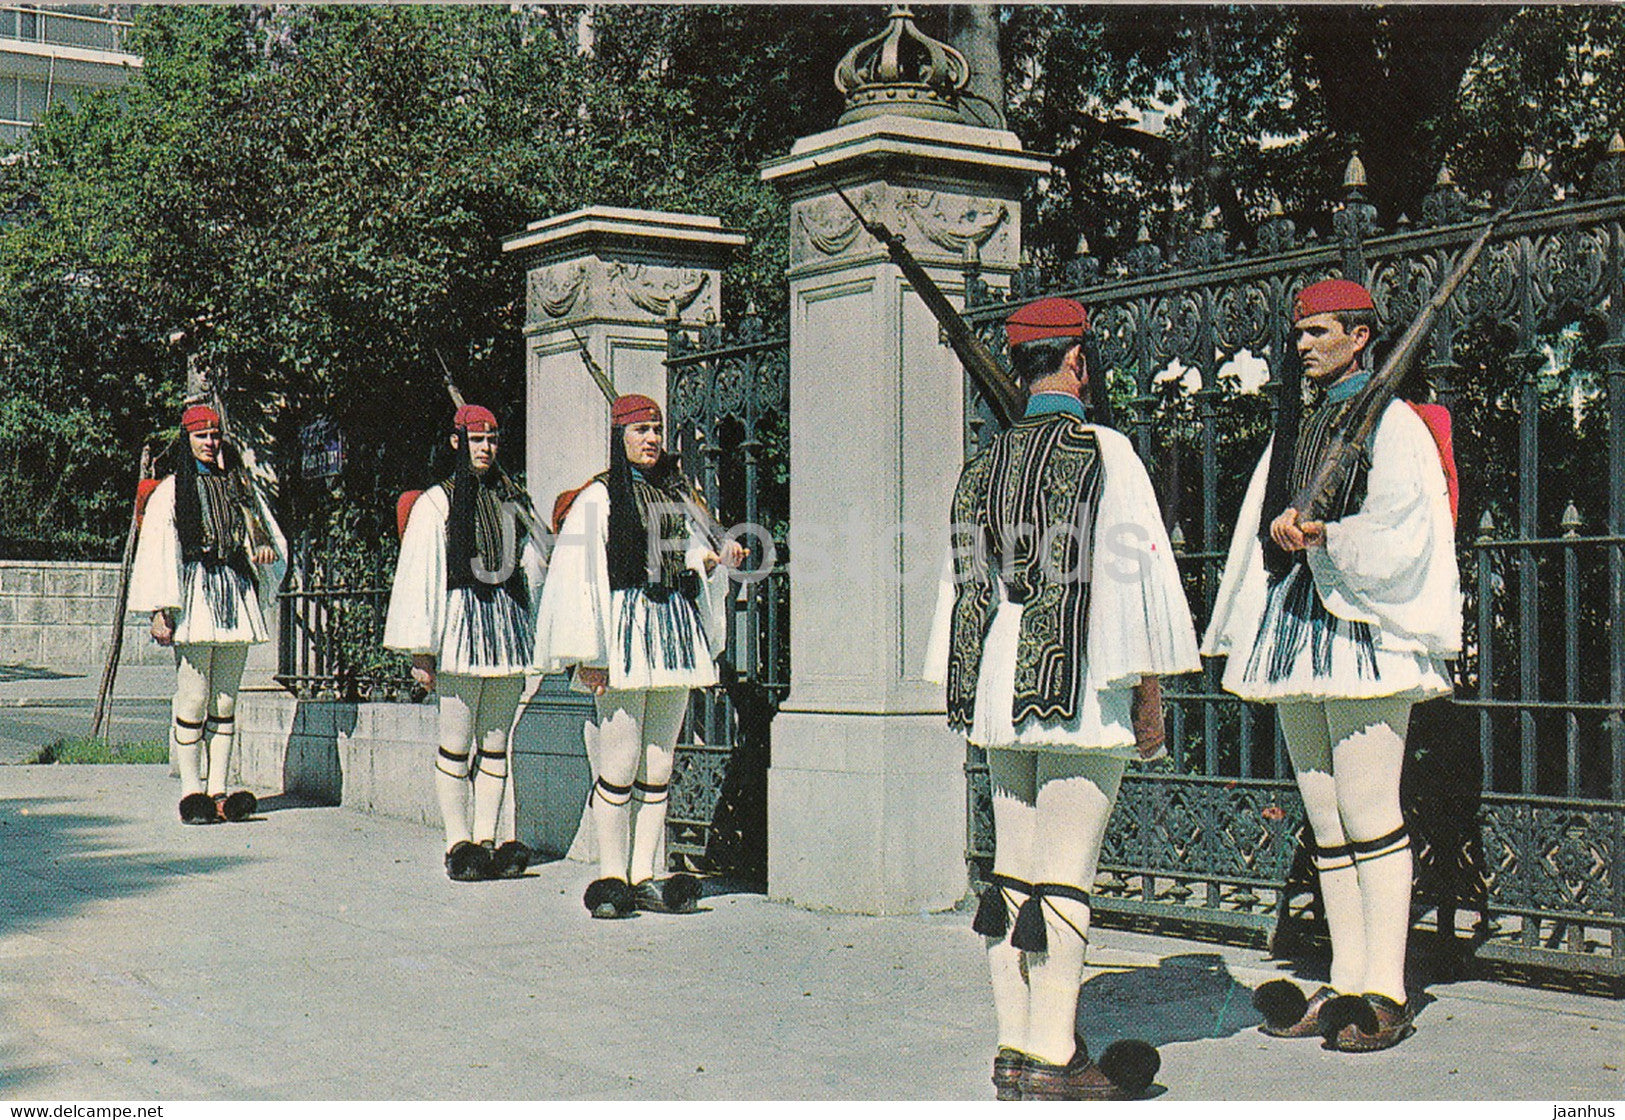 Athens - Euzones Soldiers - Greece - unused - JH Postcards